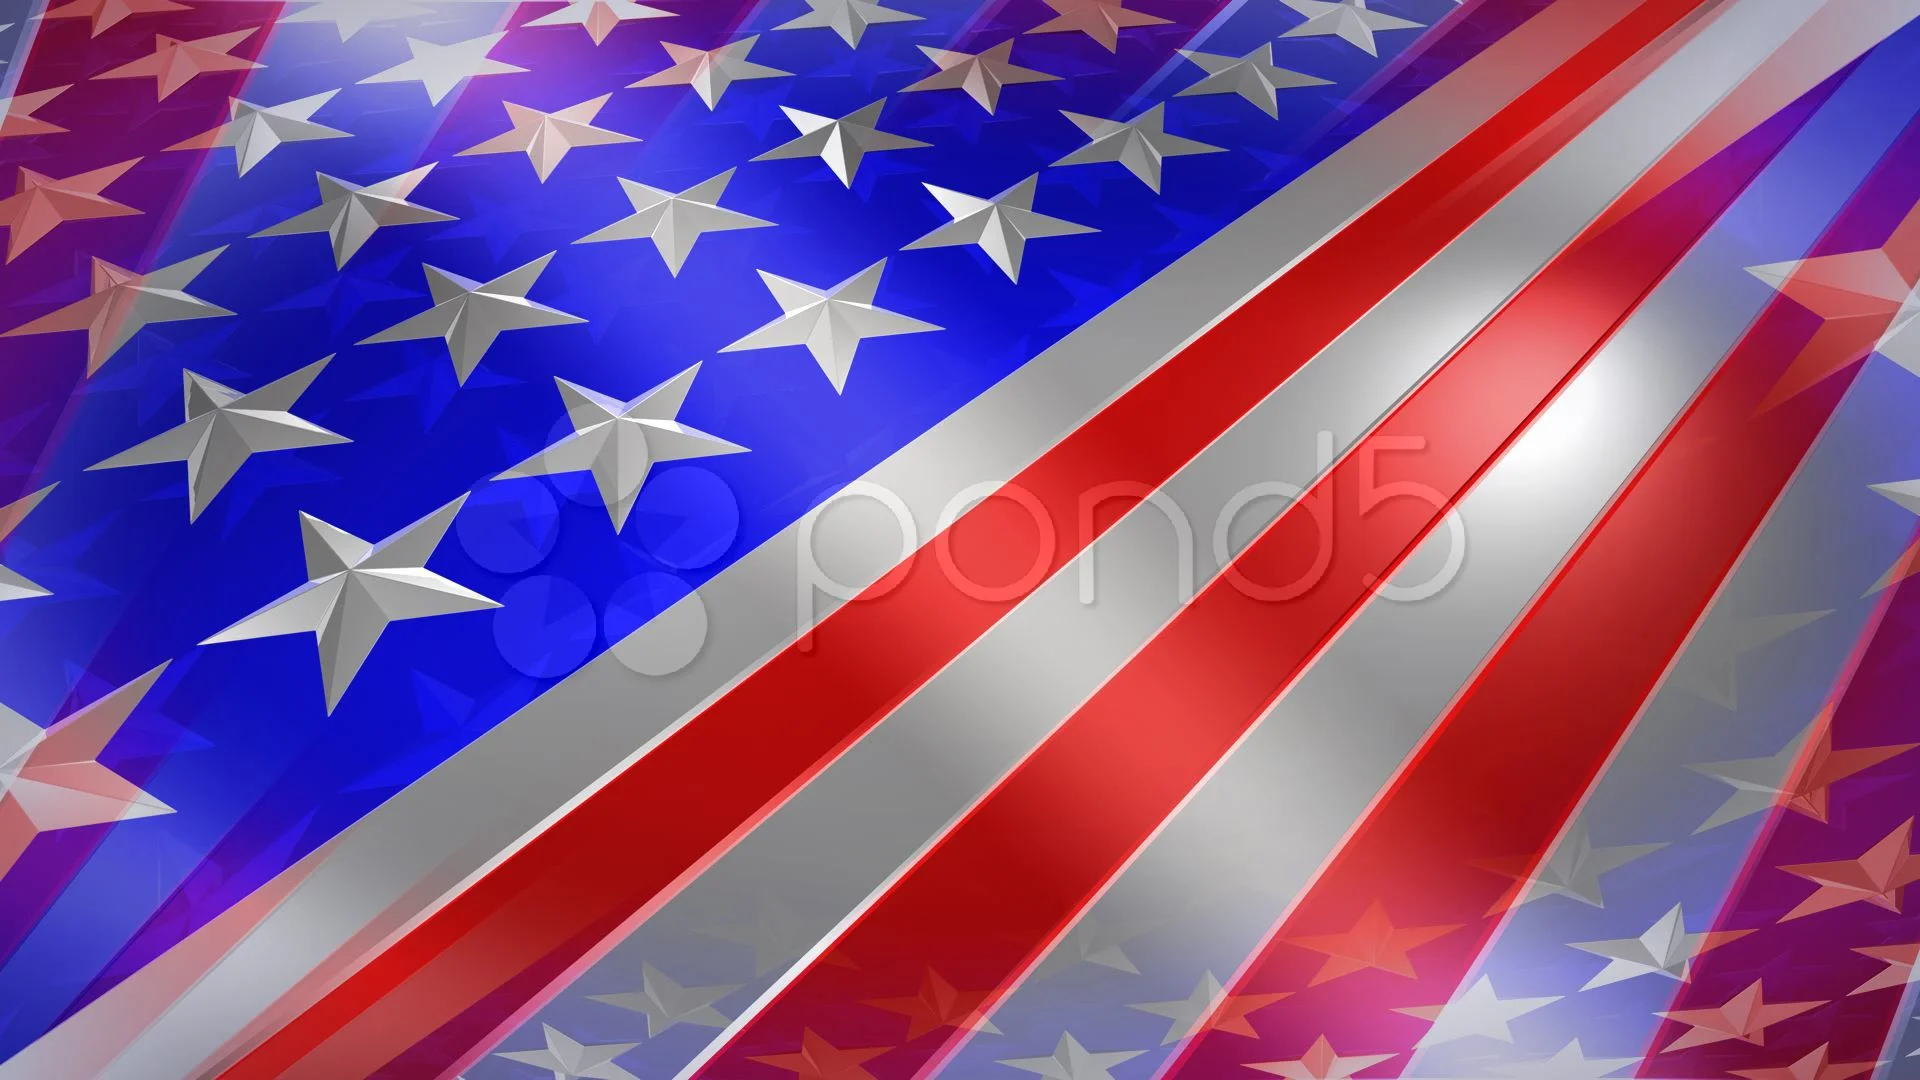 HD USA Flag Stars and Stripes, Stock Video